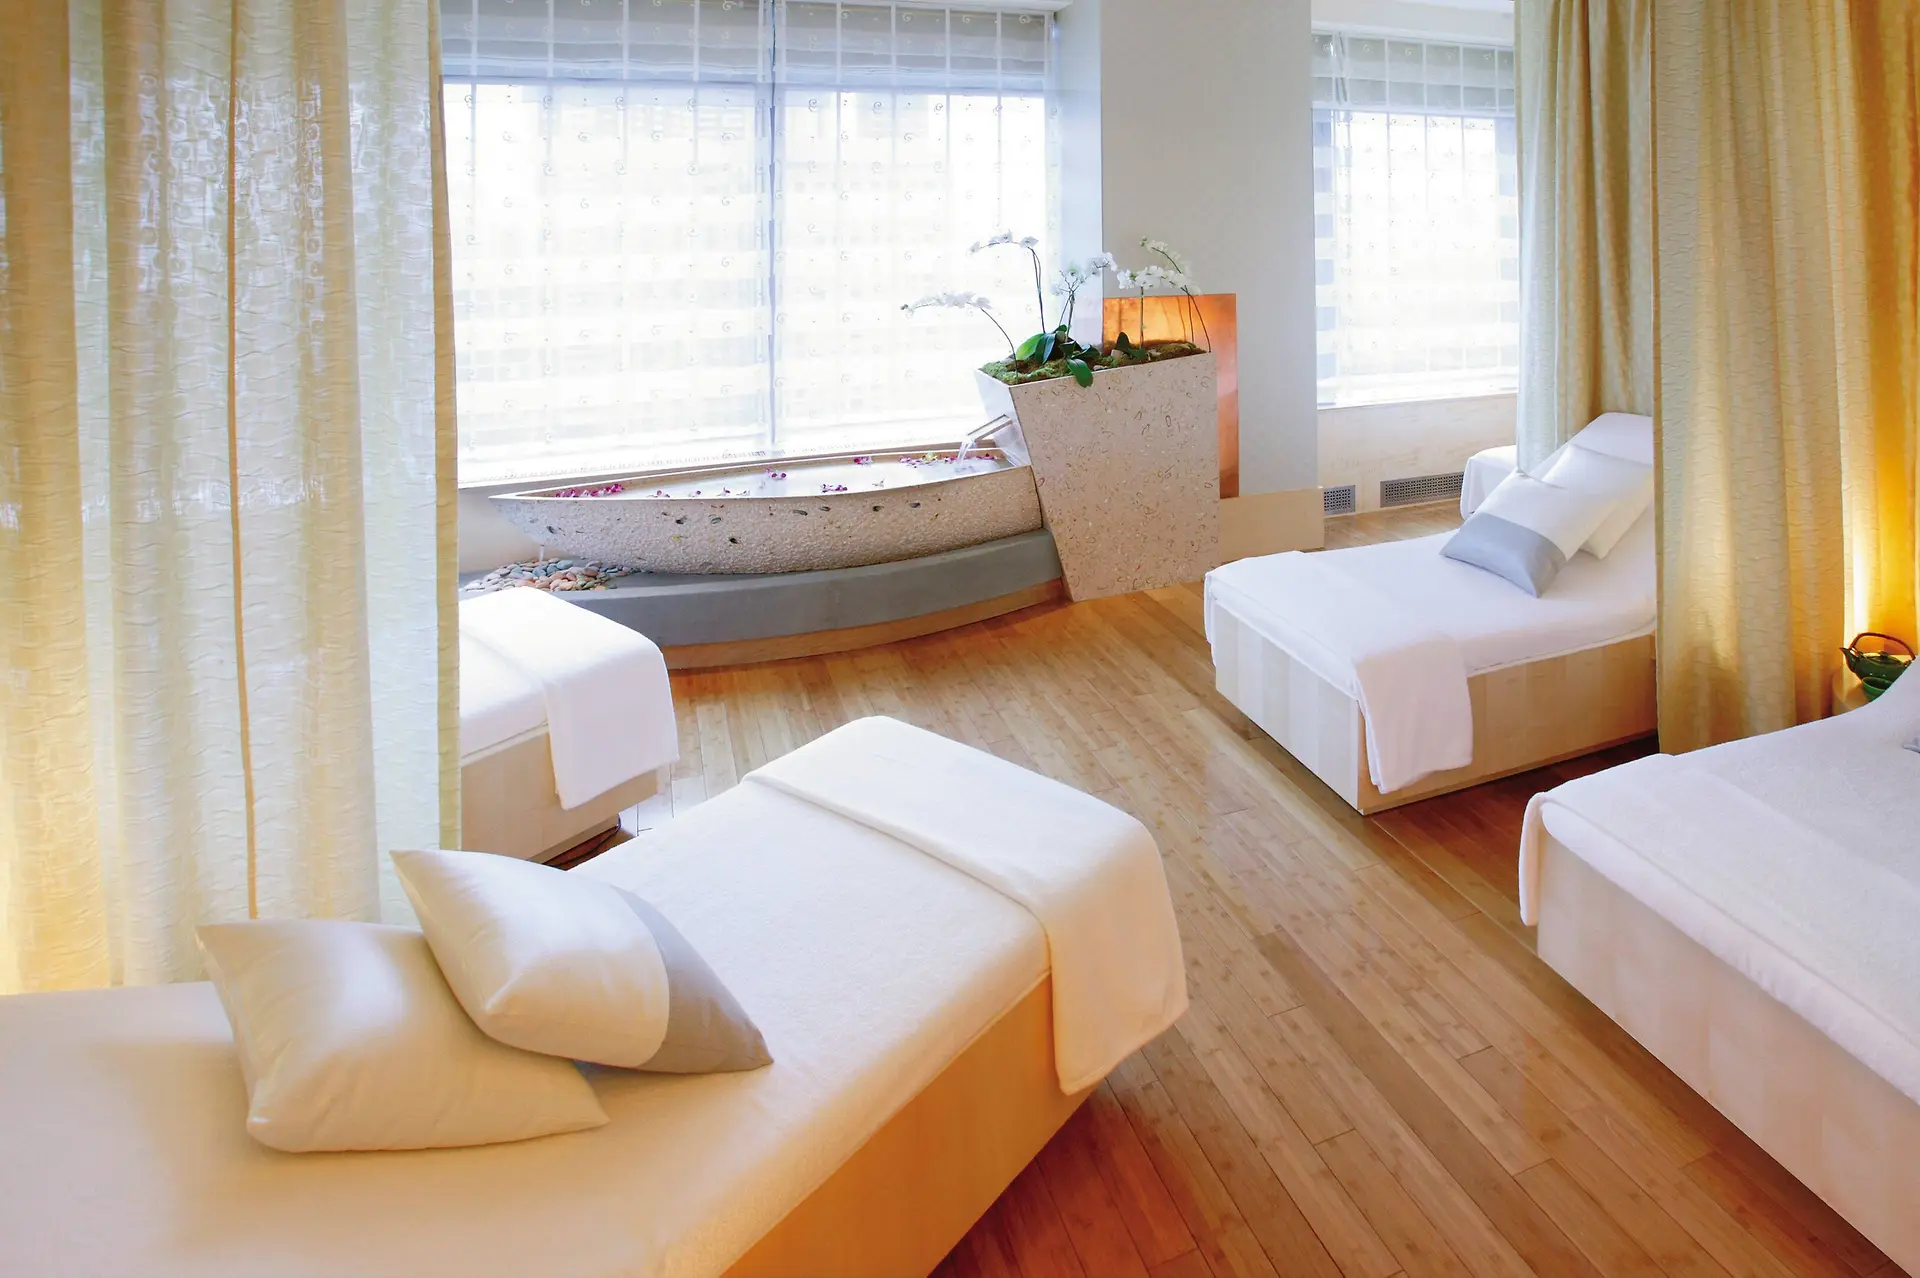 Hotel review Service & Facilities' - Mandarin Oriental New York - 5